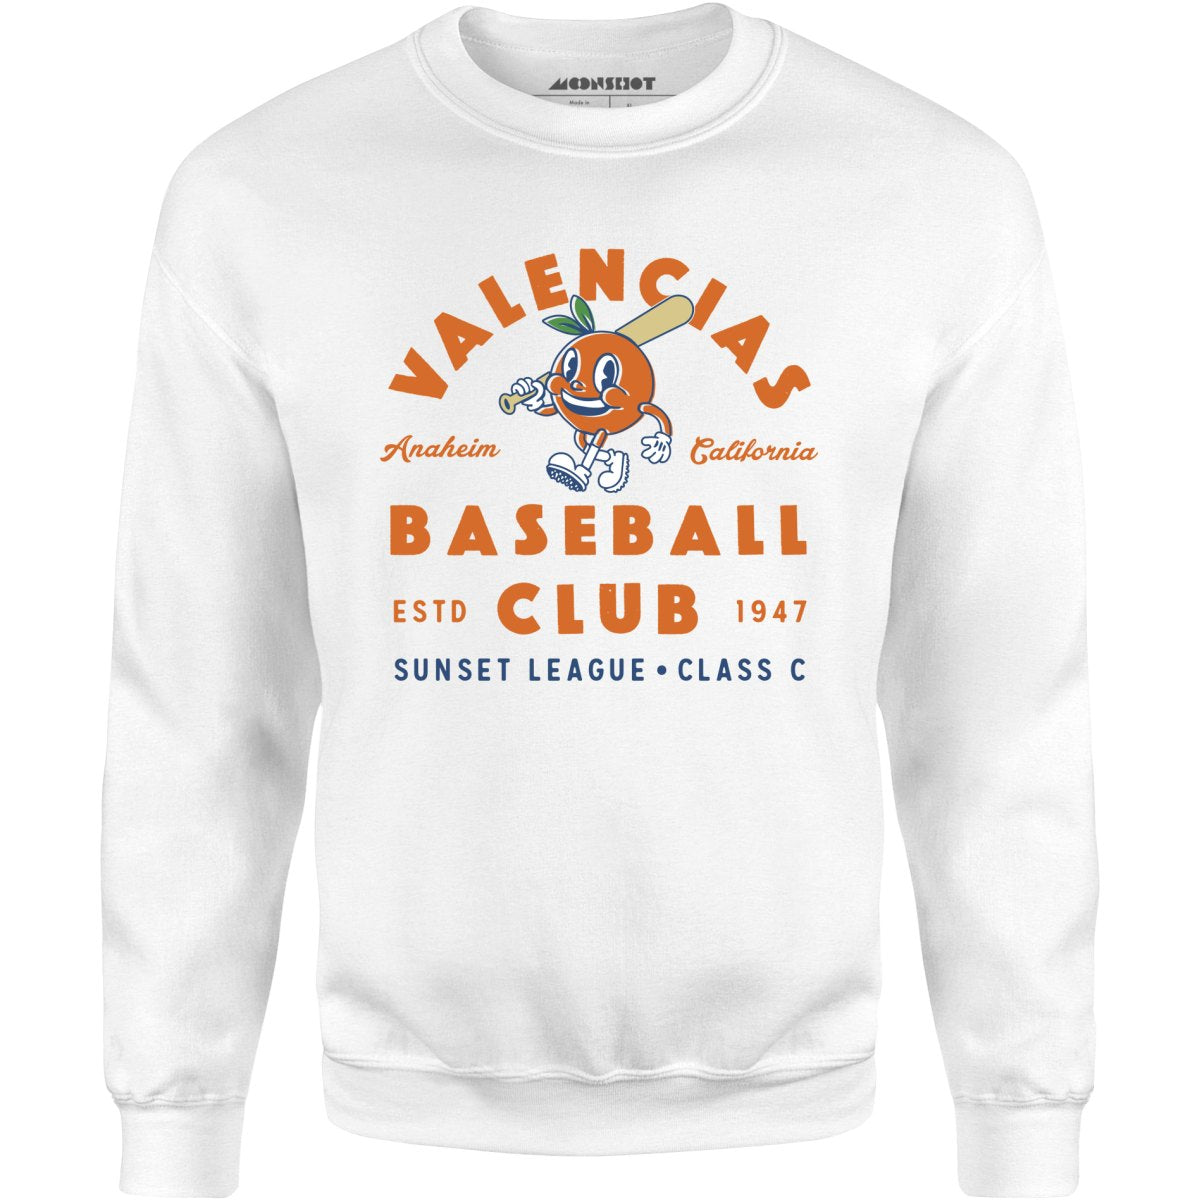 Anaheim Valencias - California - Vintage Defunct Baseball Teams - Unisex Sweatshirt